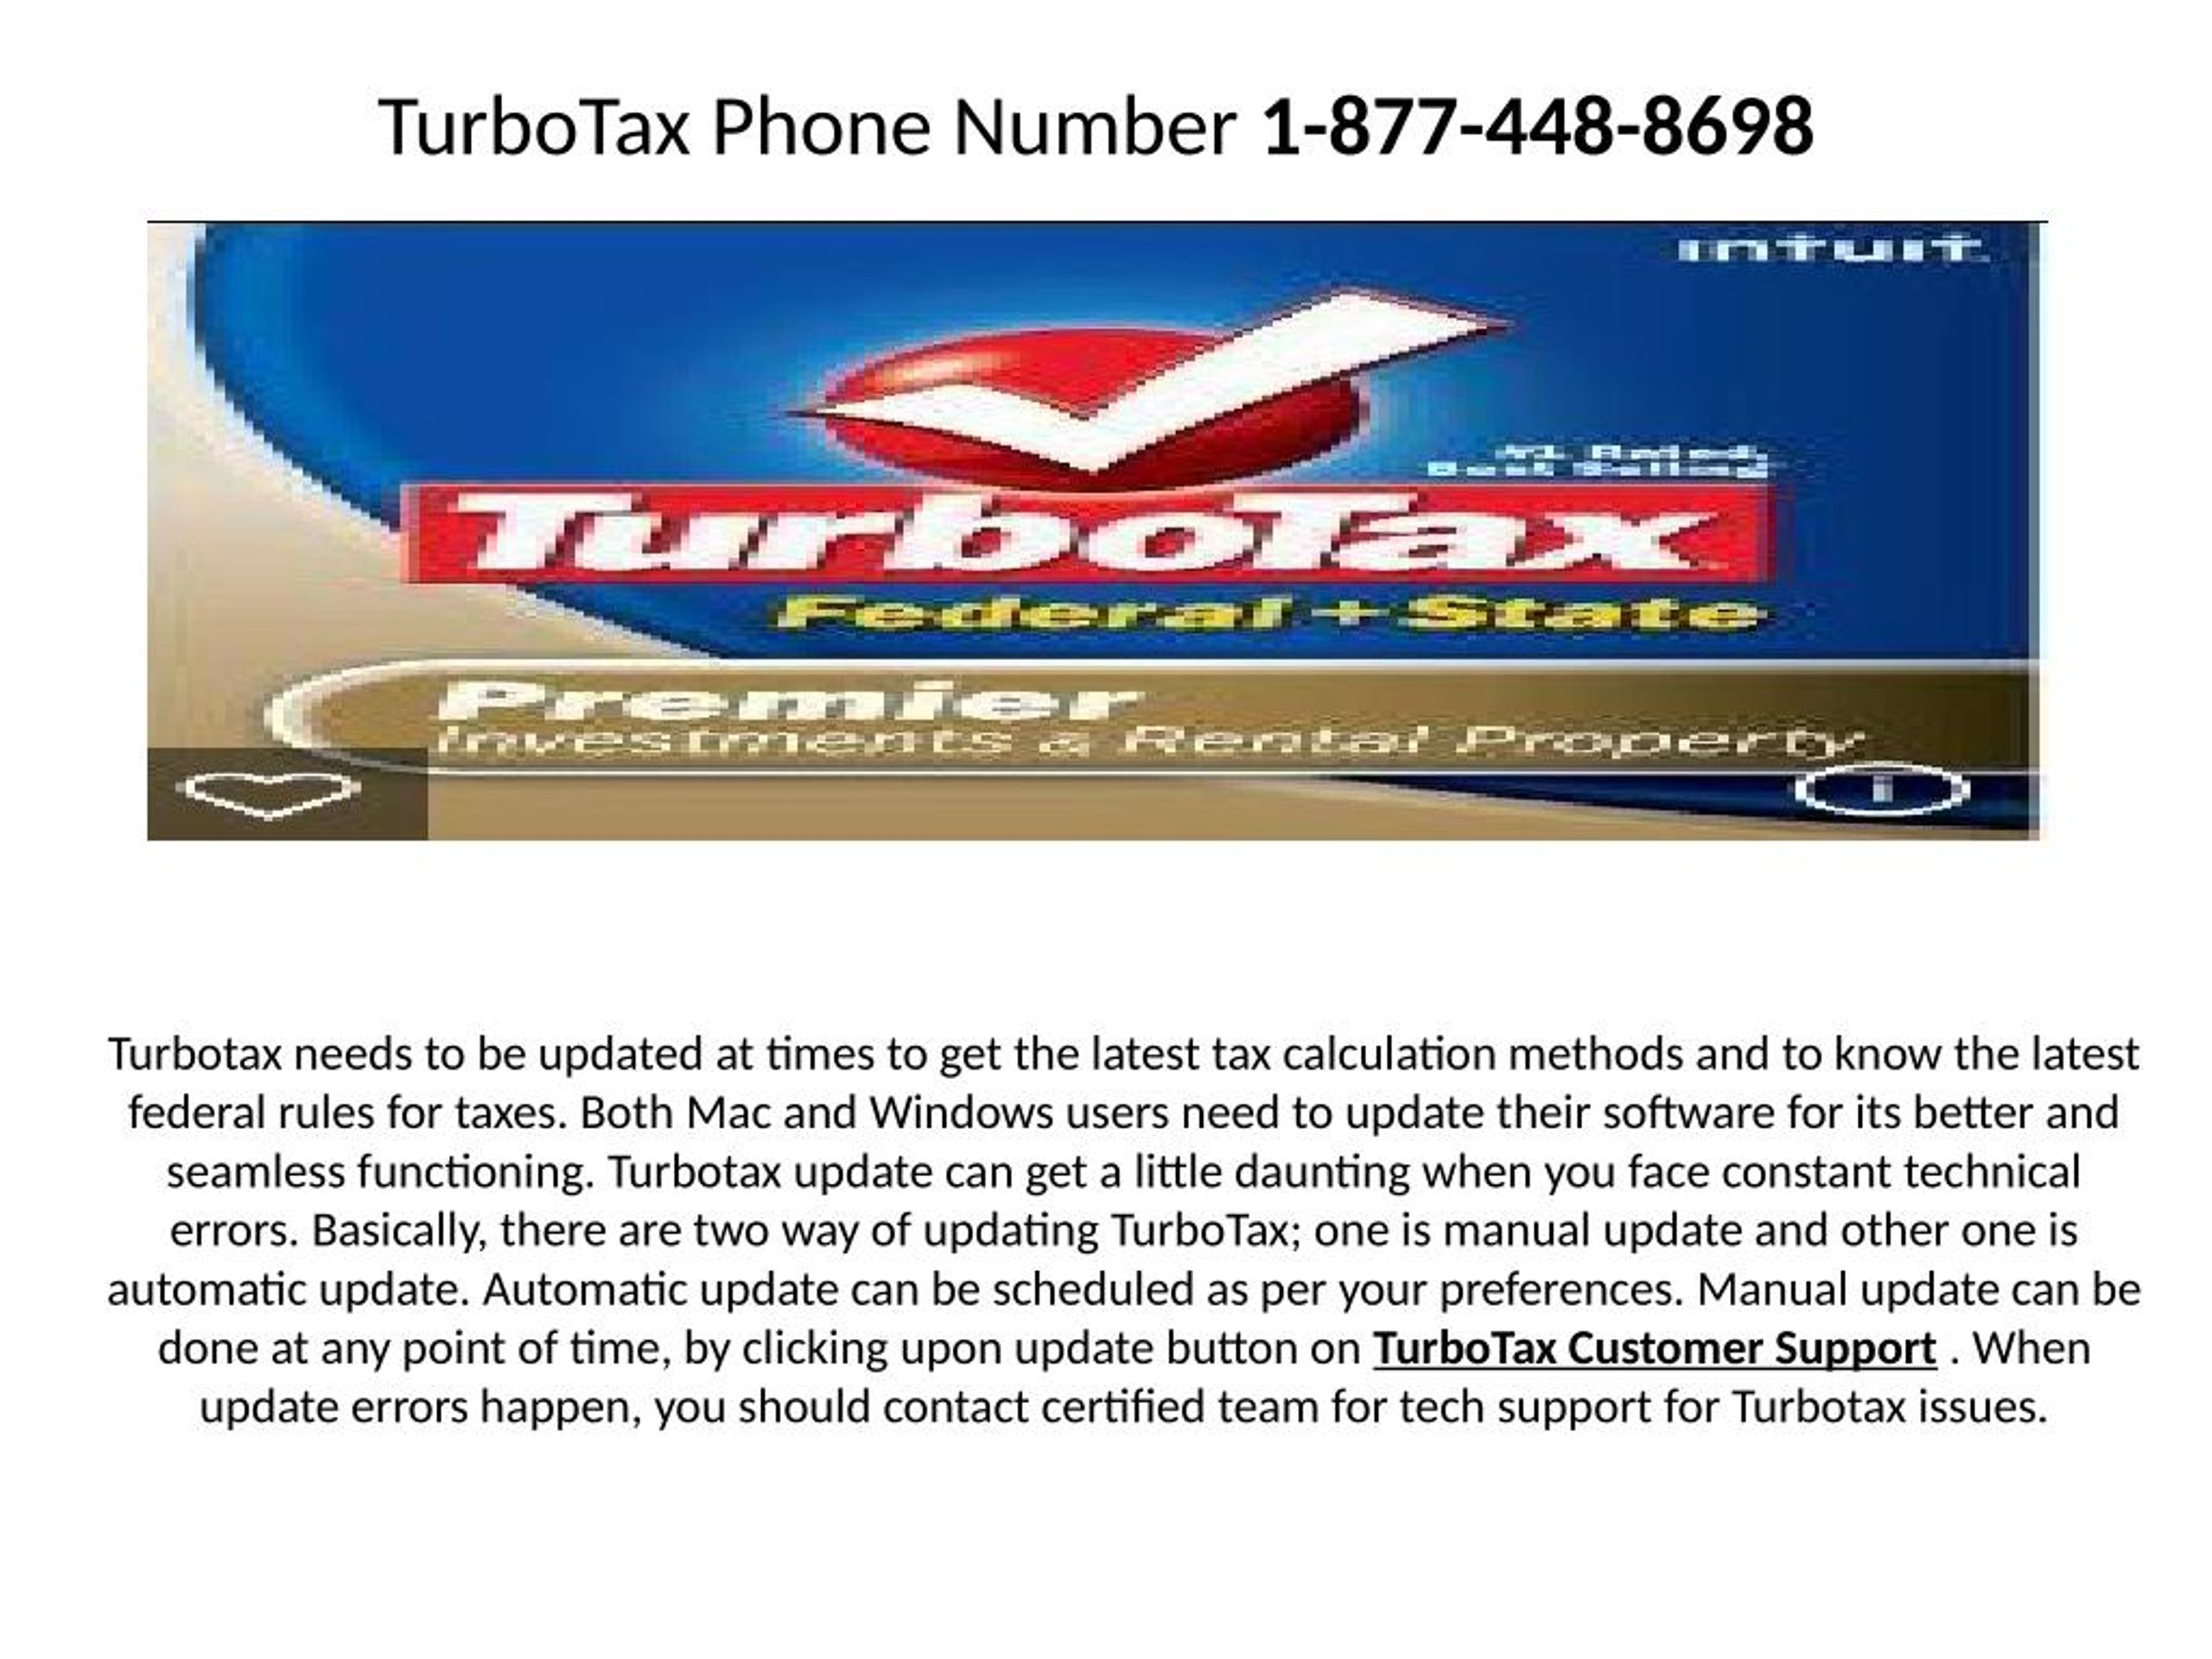 call turbotax customer support